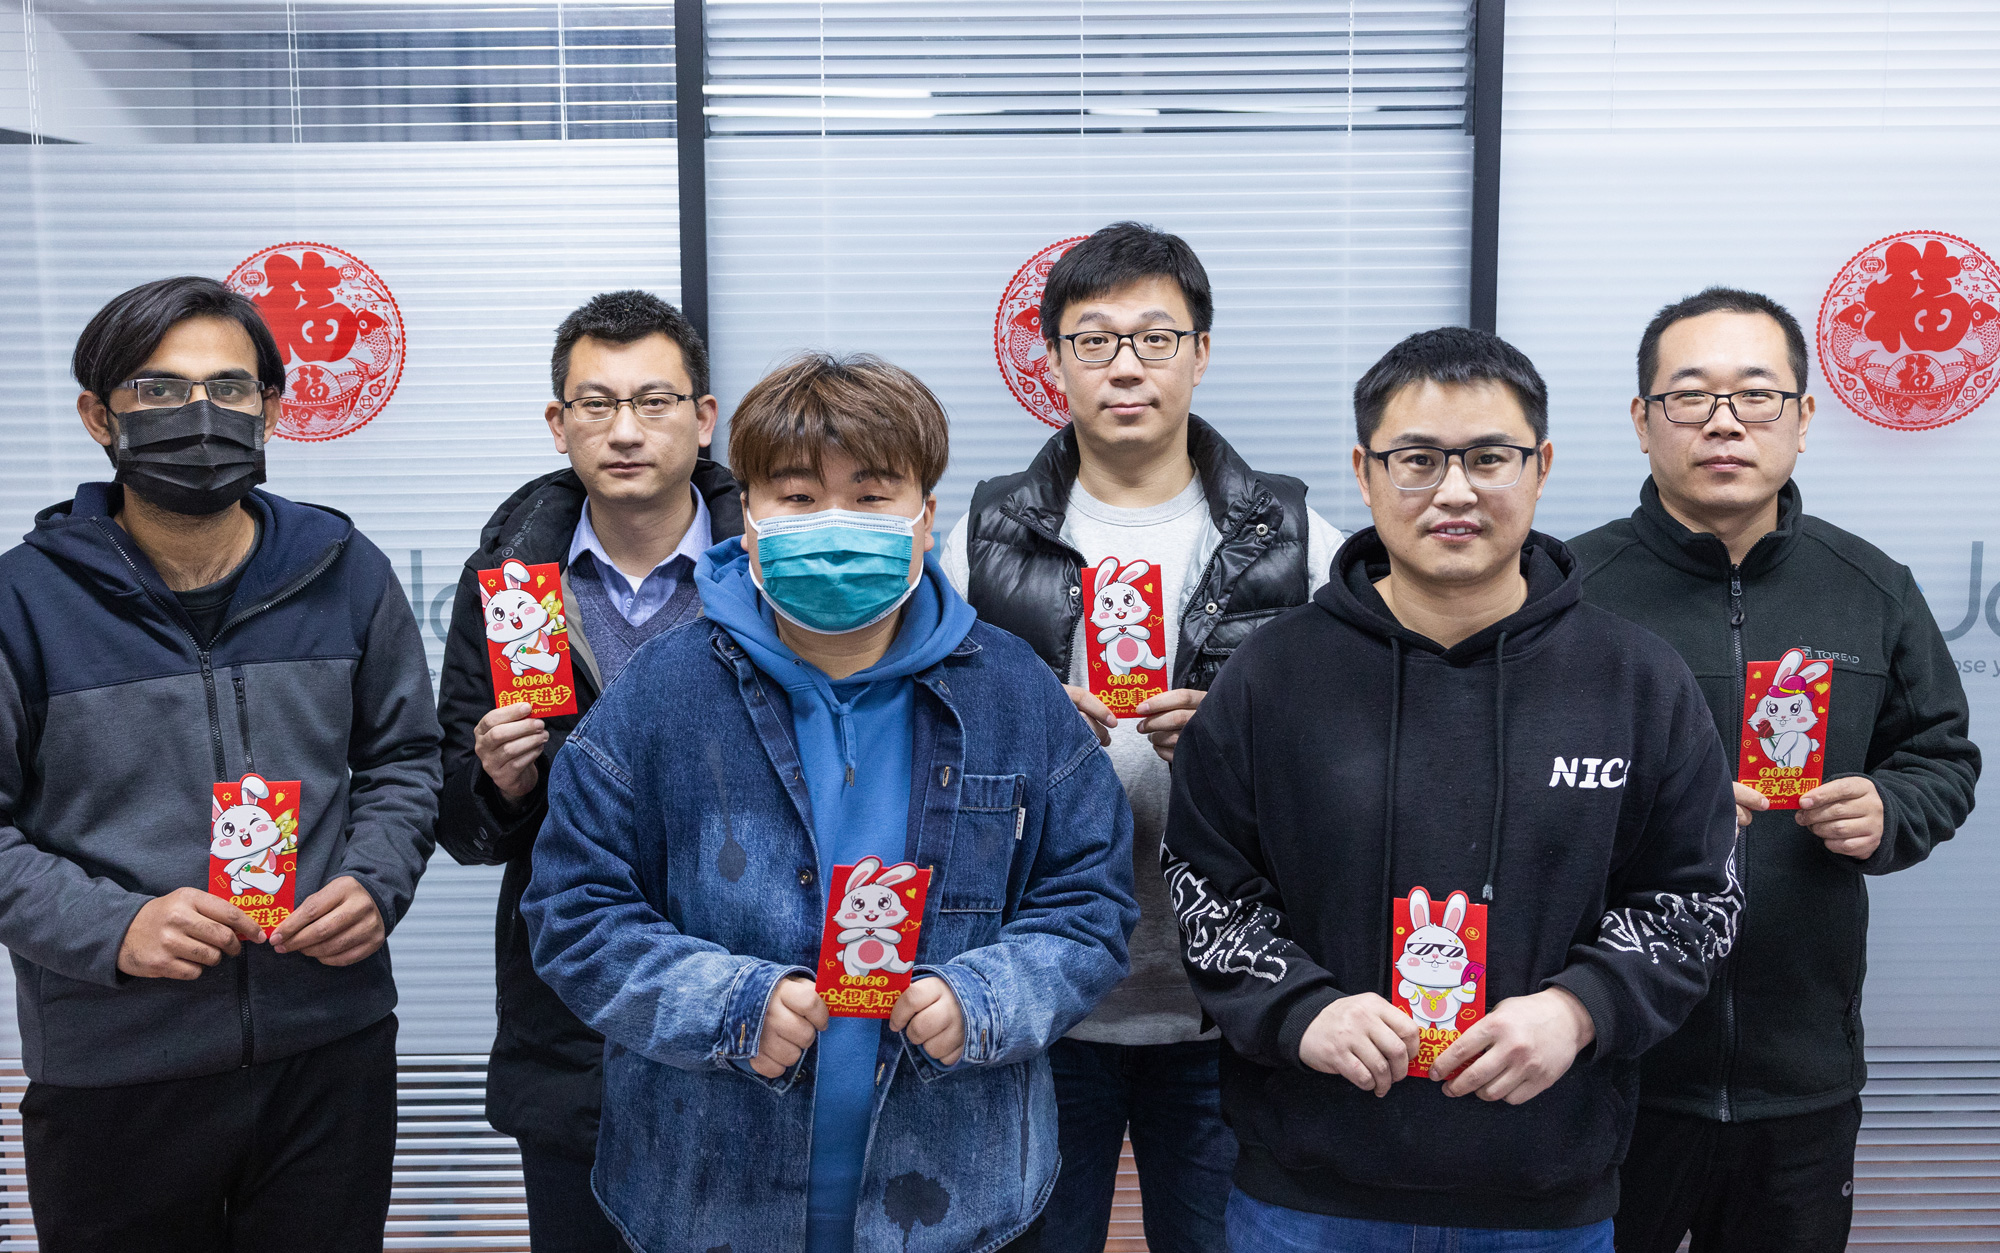 team member celebrating CNY with red envelopes